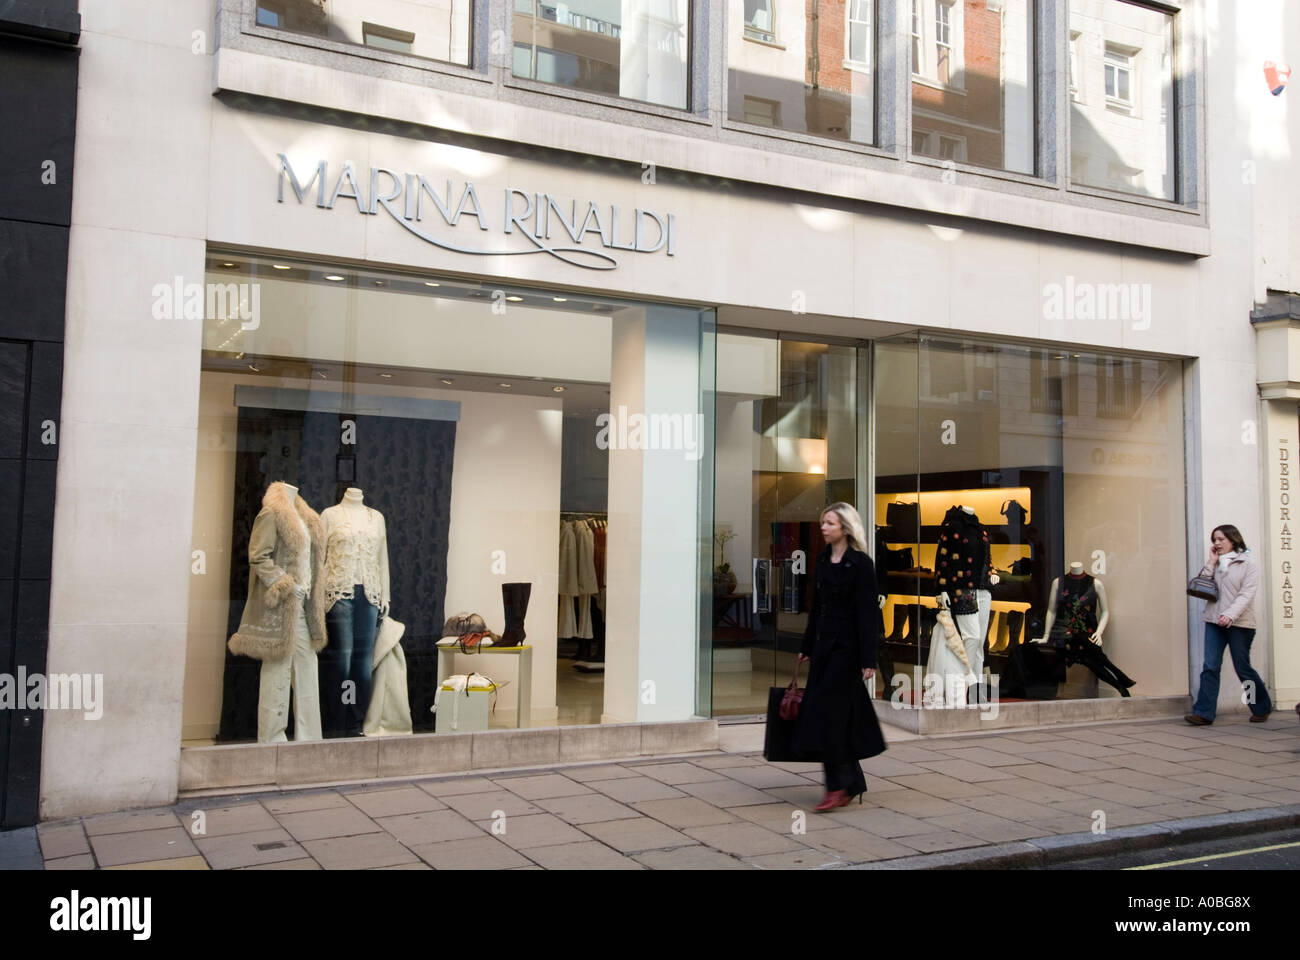 Marina Rinaldi fashion shop in Bond Street London England UK Stock Photo -  Alamy